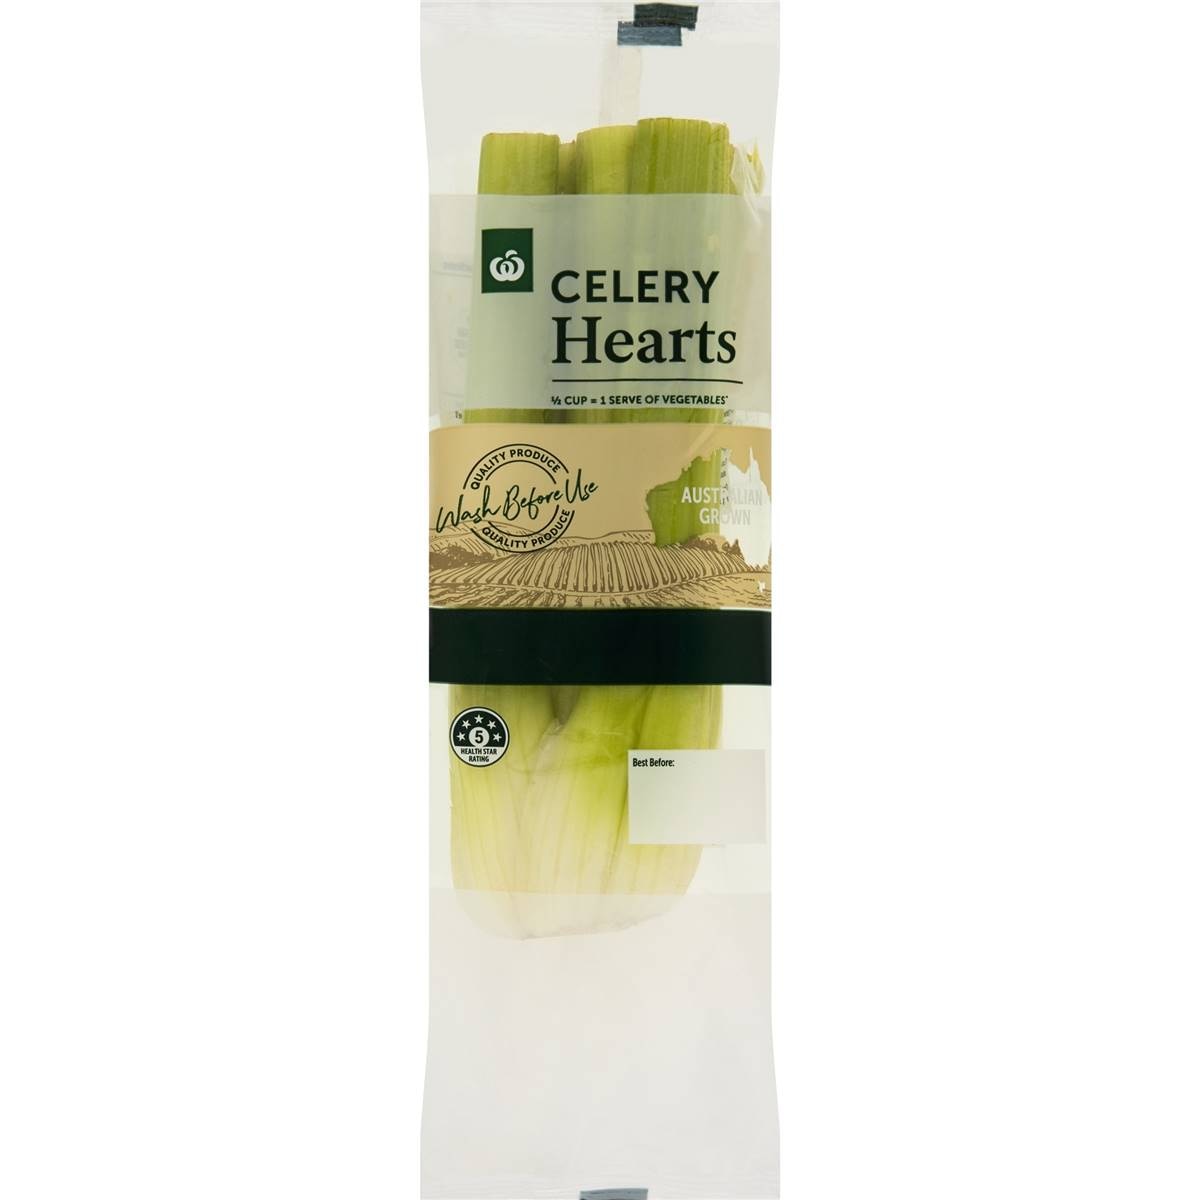 Calories in Woolworths Celery Heart